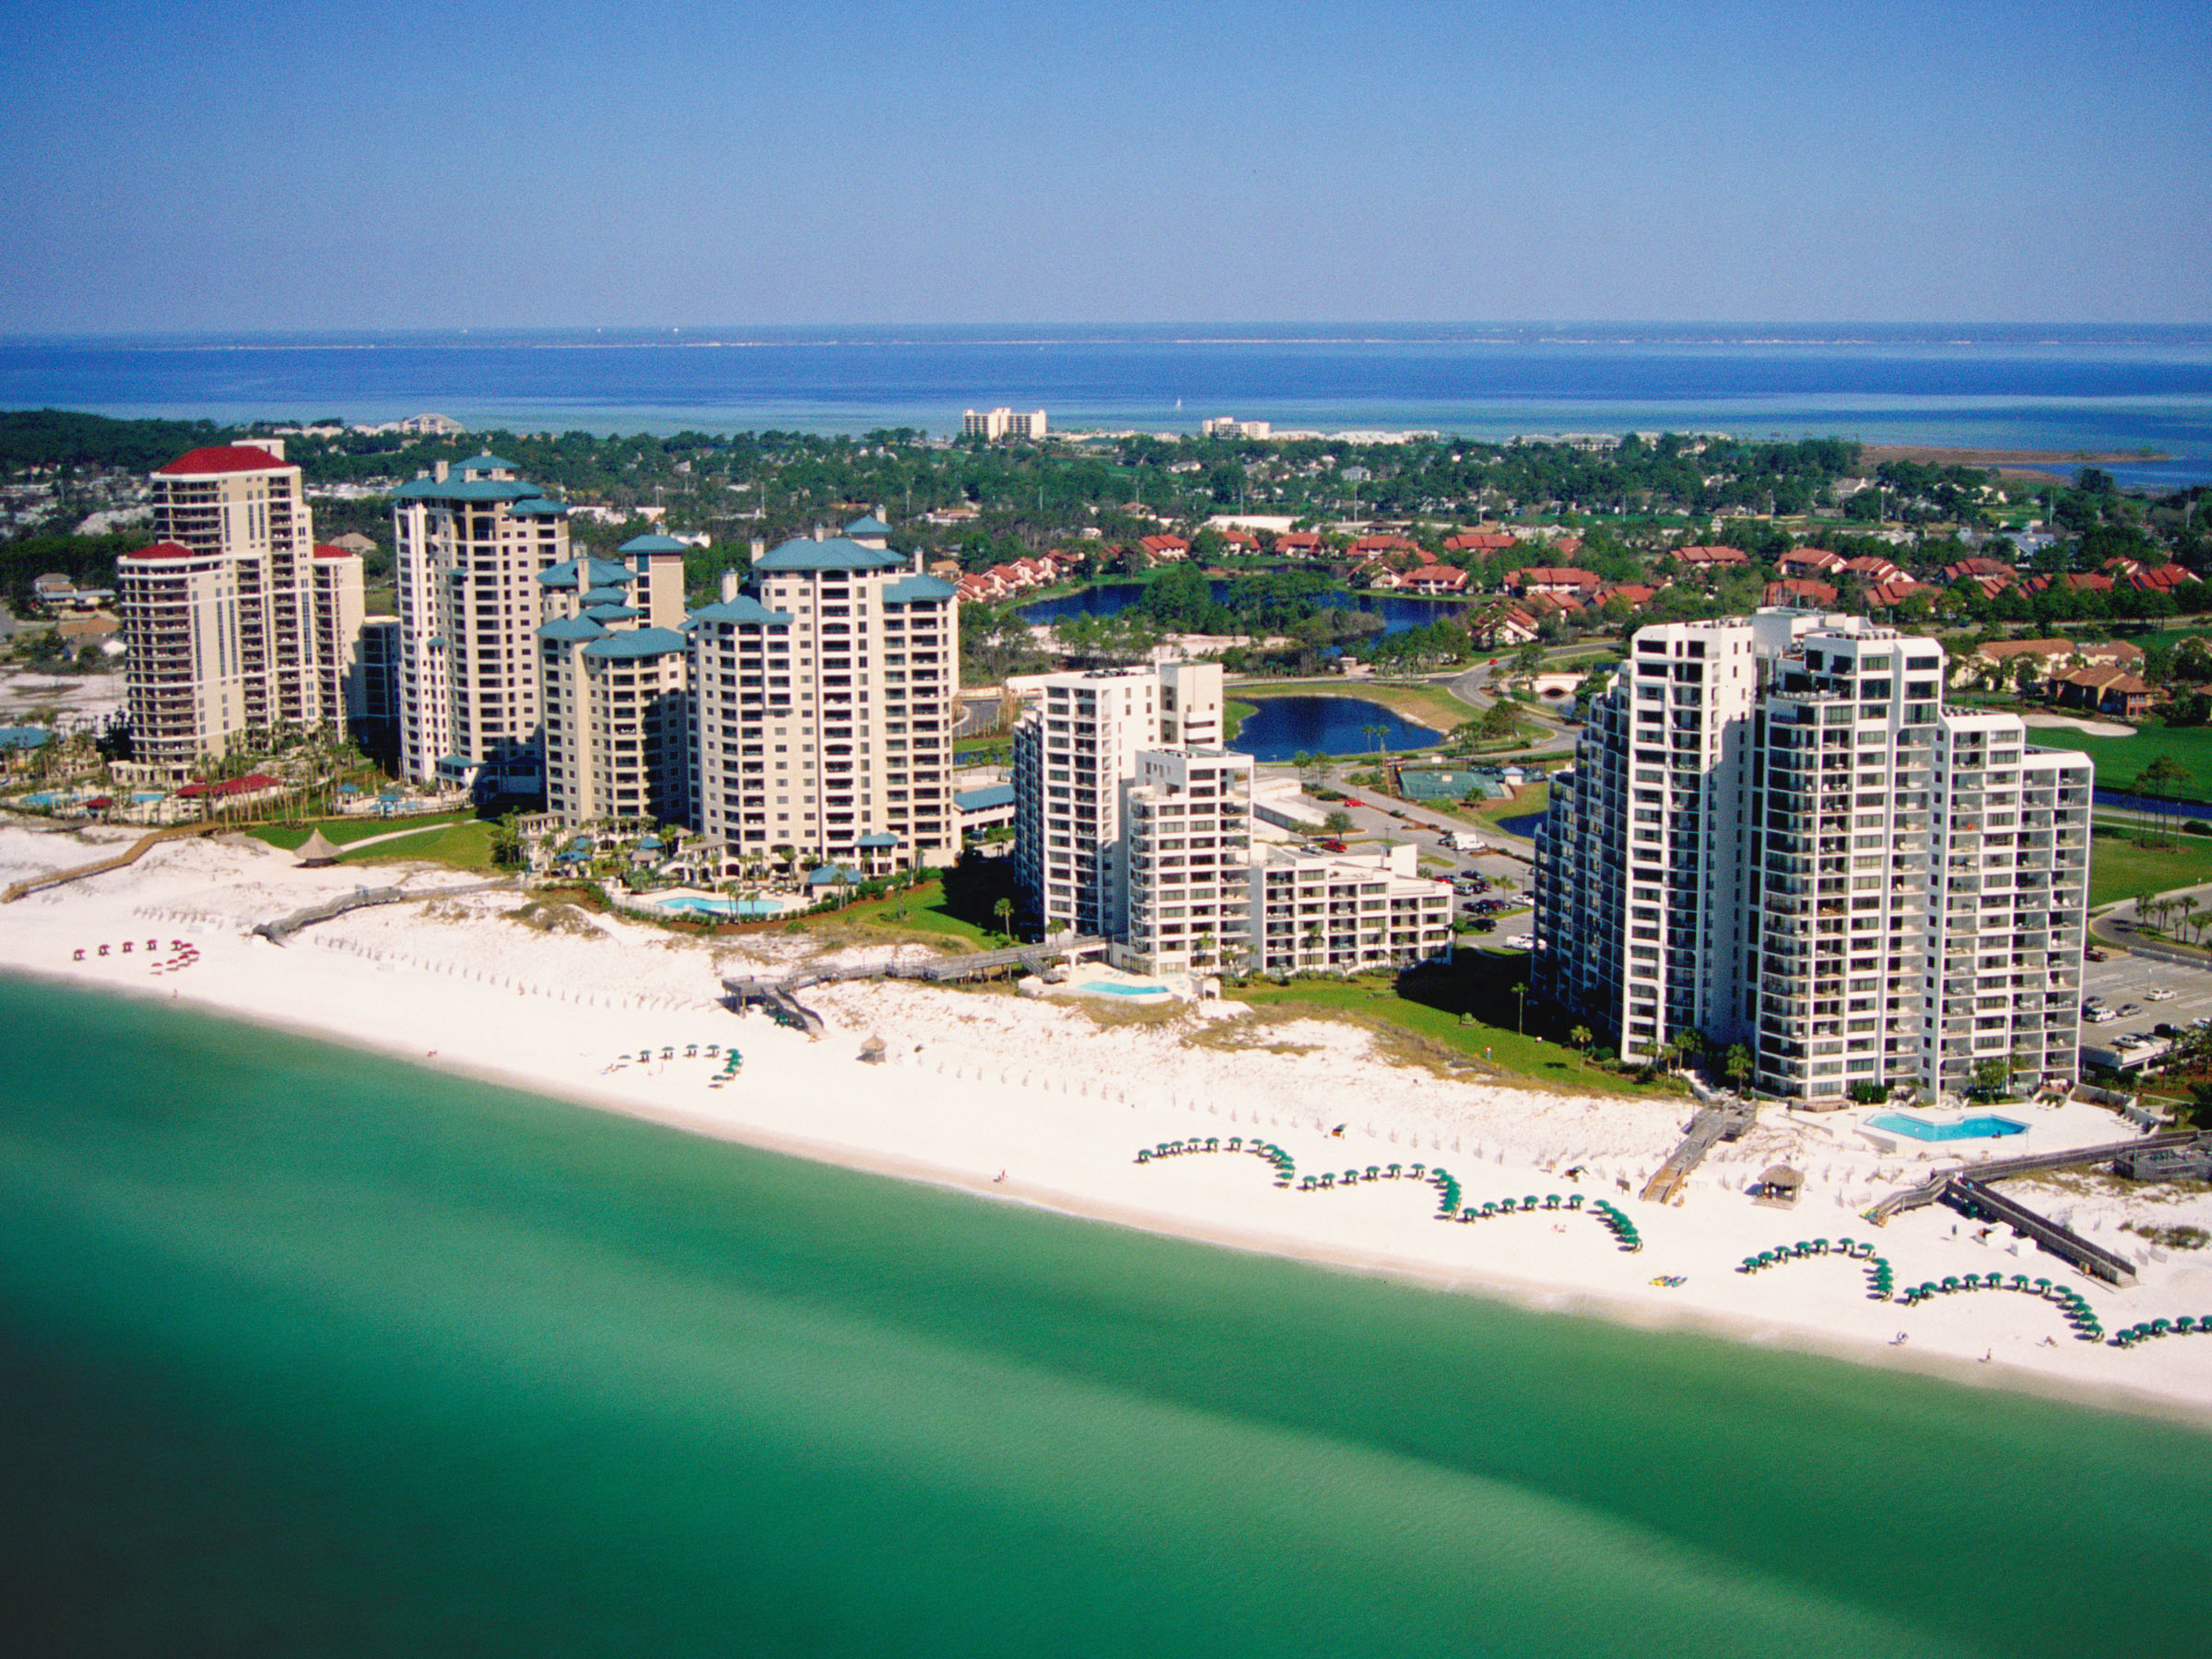 Sandestin Golf and Beach Resort Named #1 Hotel in Destin by U.S. News